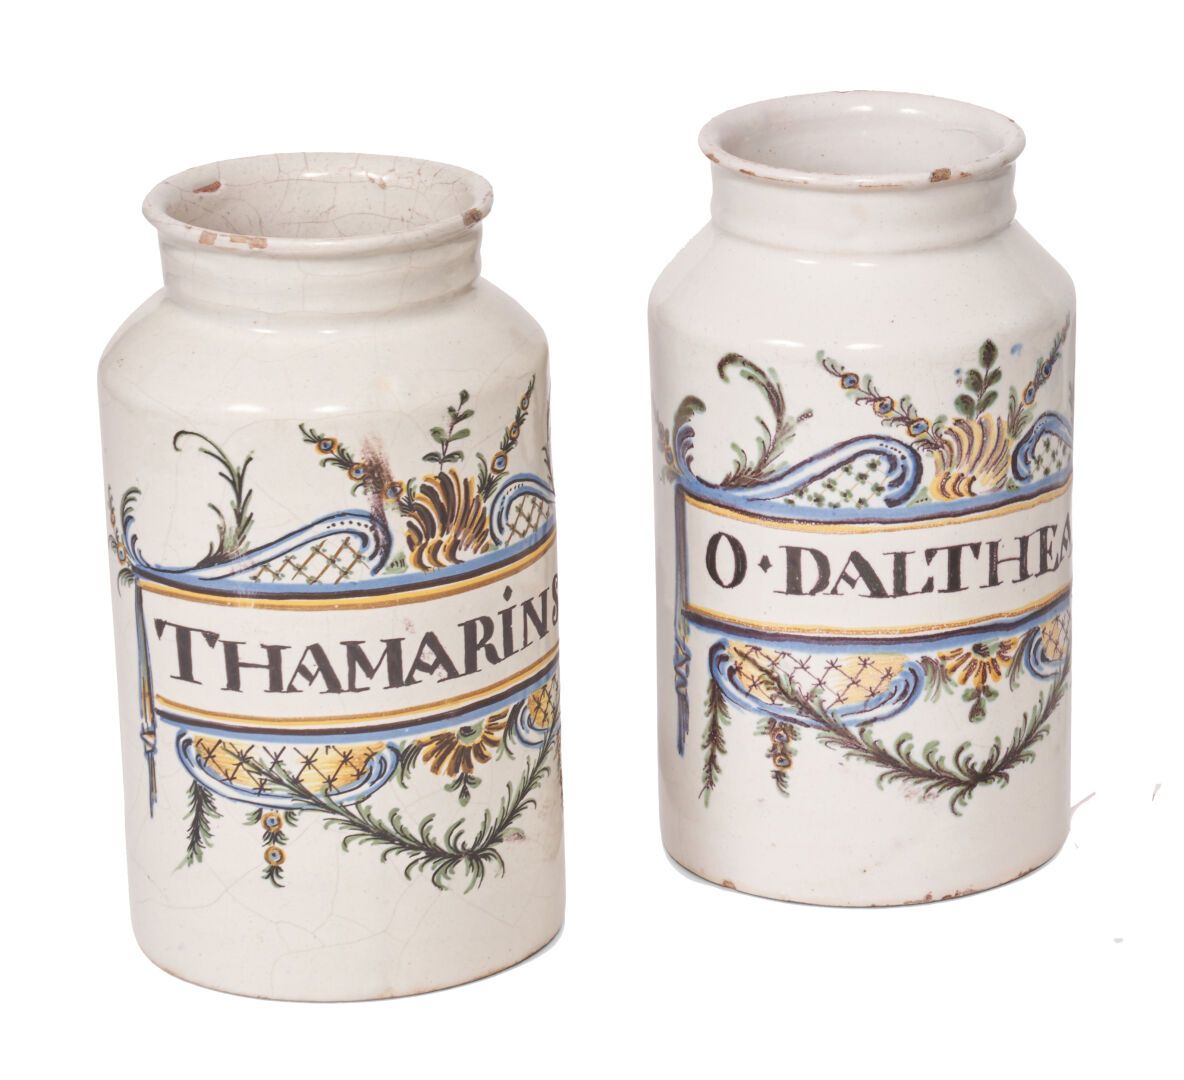 Null 中型
两个陶制圆柱形药罐，多色装饰的铭文THAMARINS和O DALTHEA，周围环绕着叶子和花架背景的叶子。
18世纪。 
H.21厘米。
小碎片&hellip;